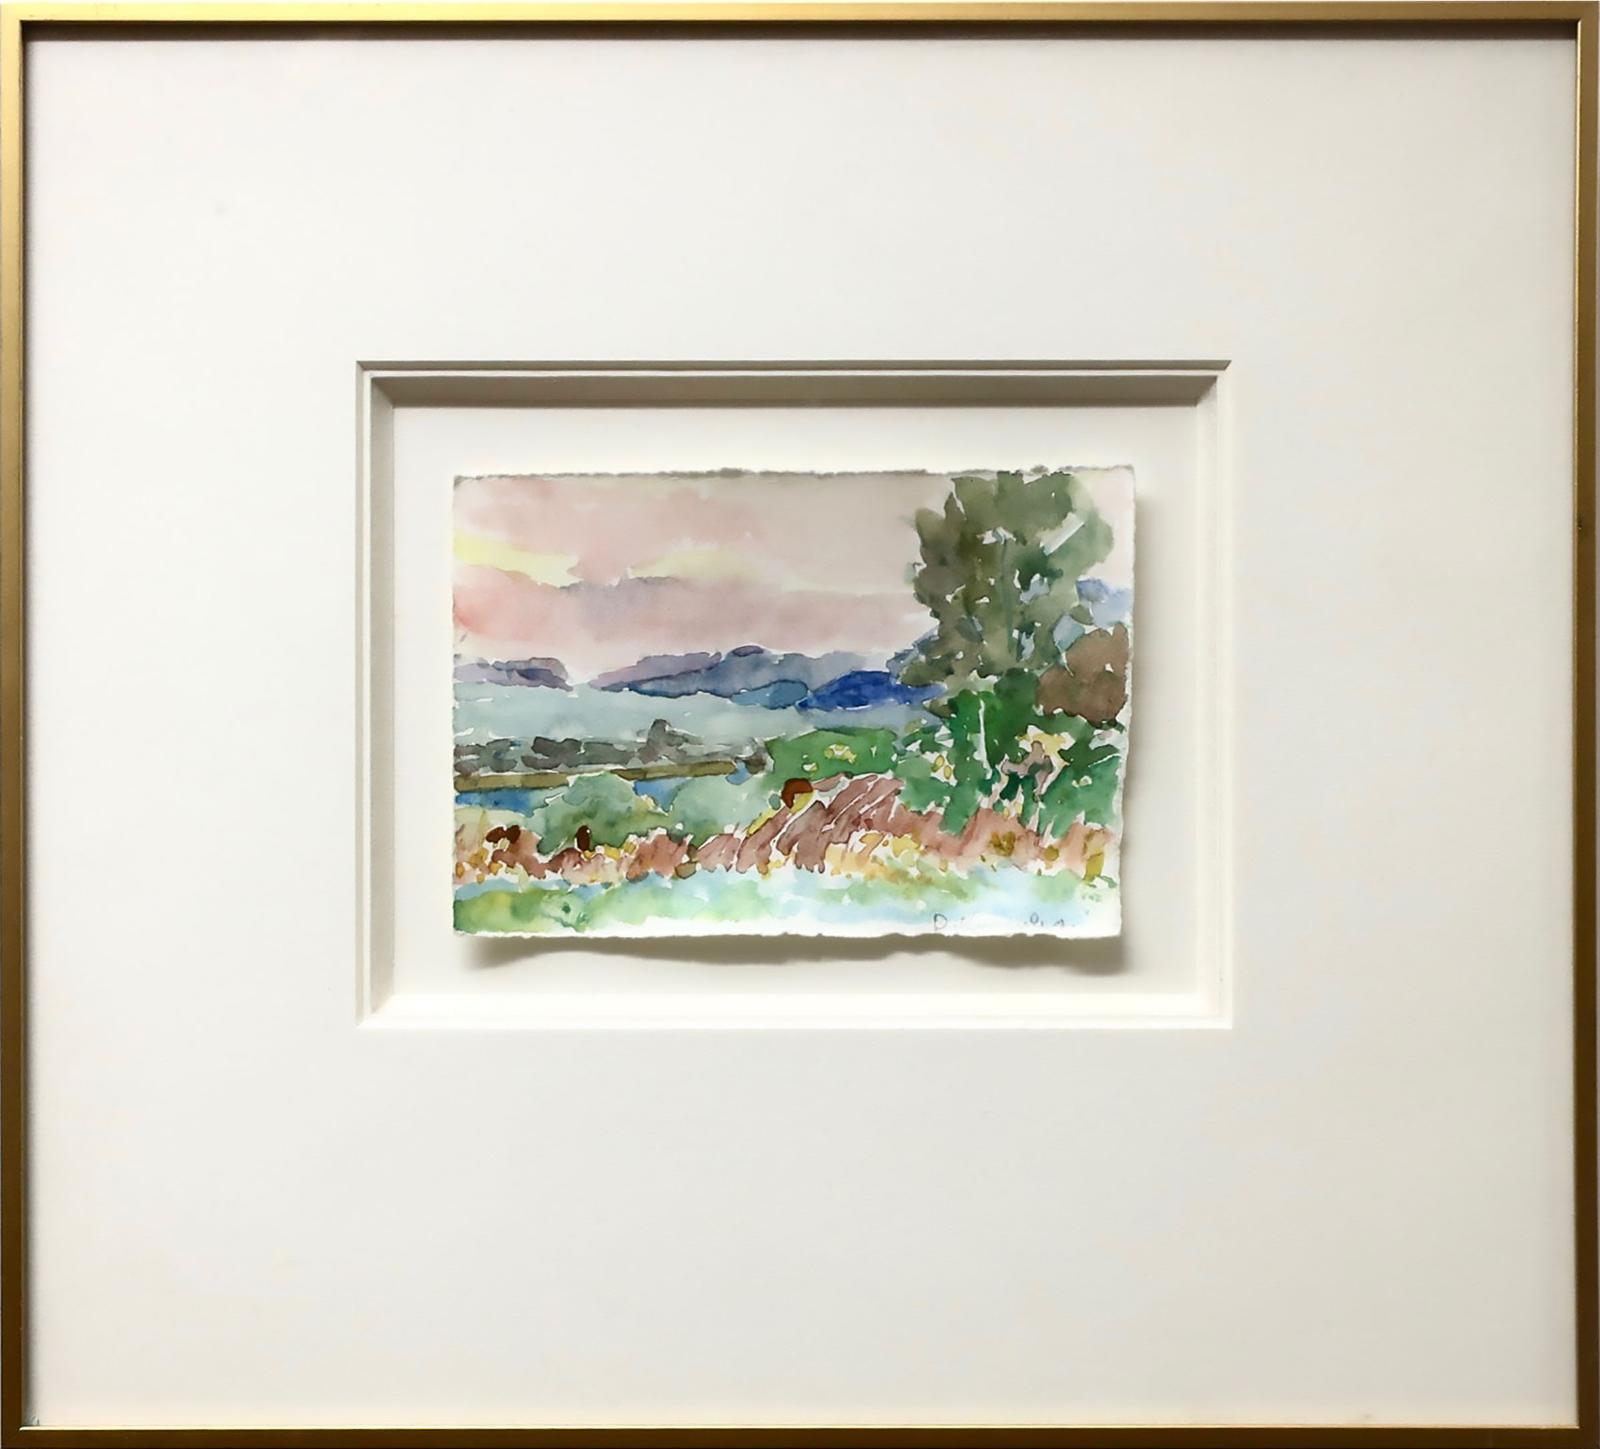 Dorothy Elsie Knowles (1927-2001) - Untitled (Landscape)